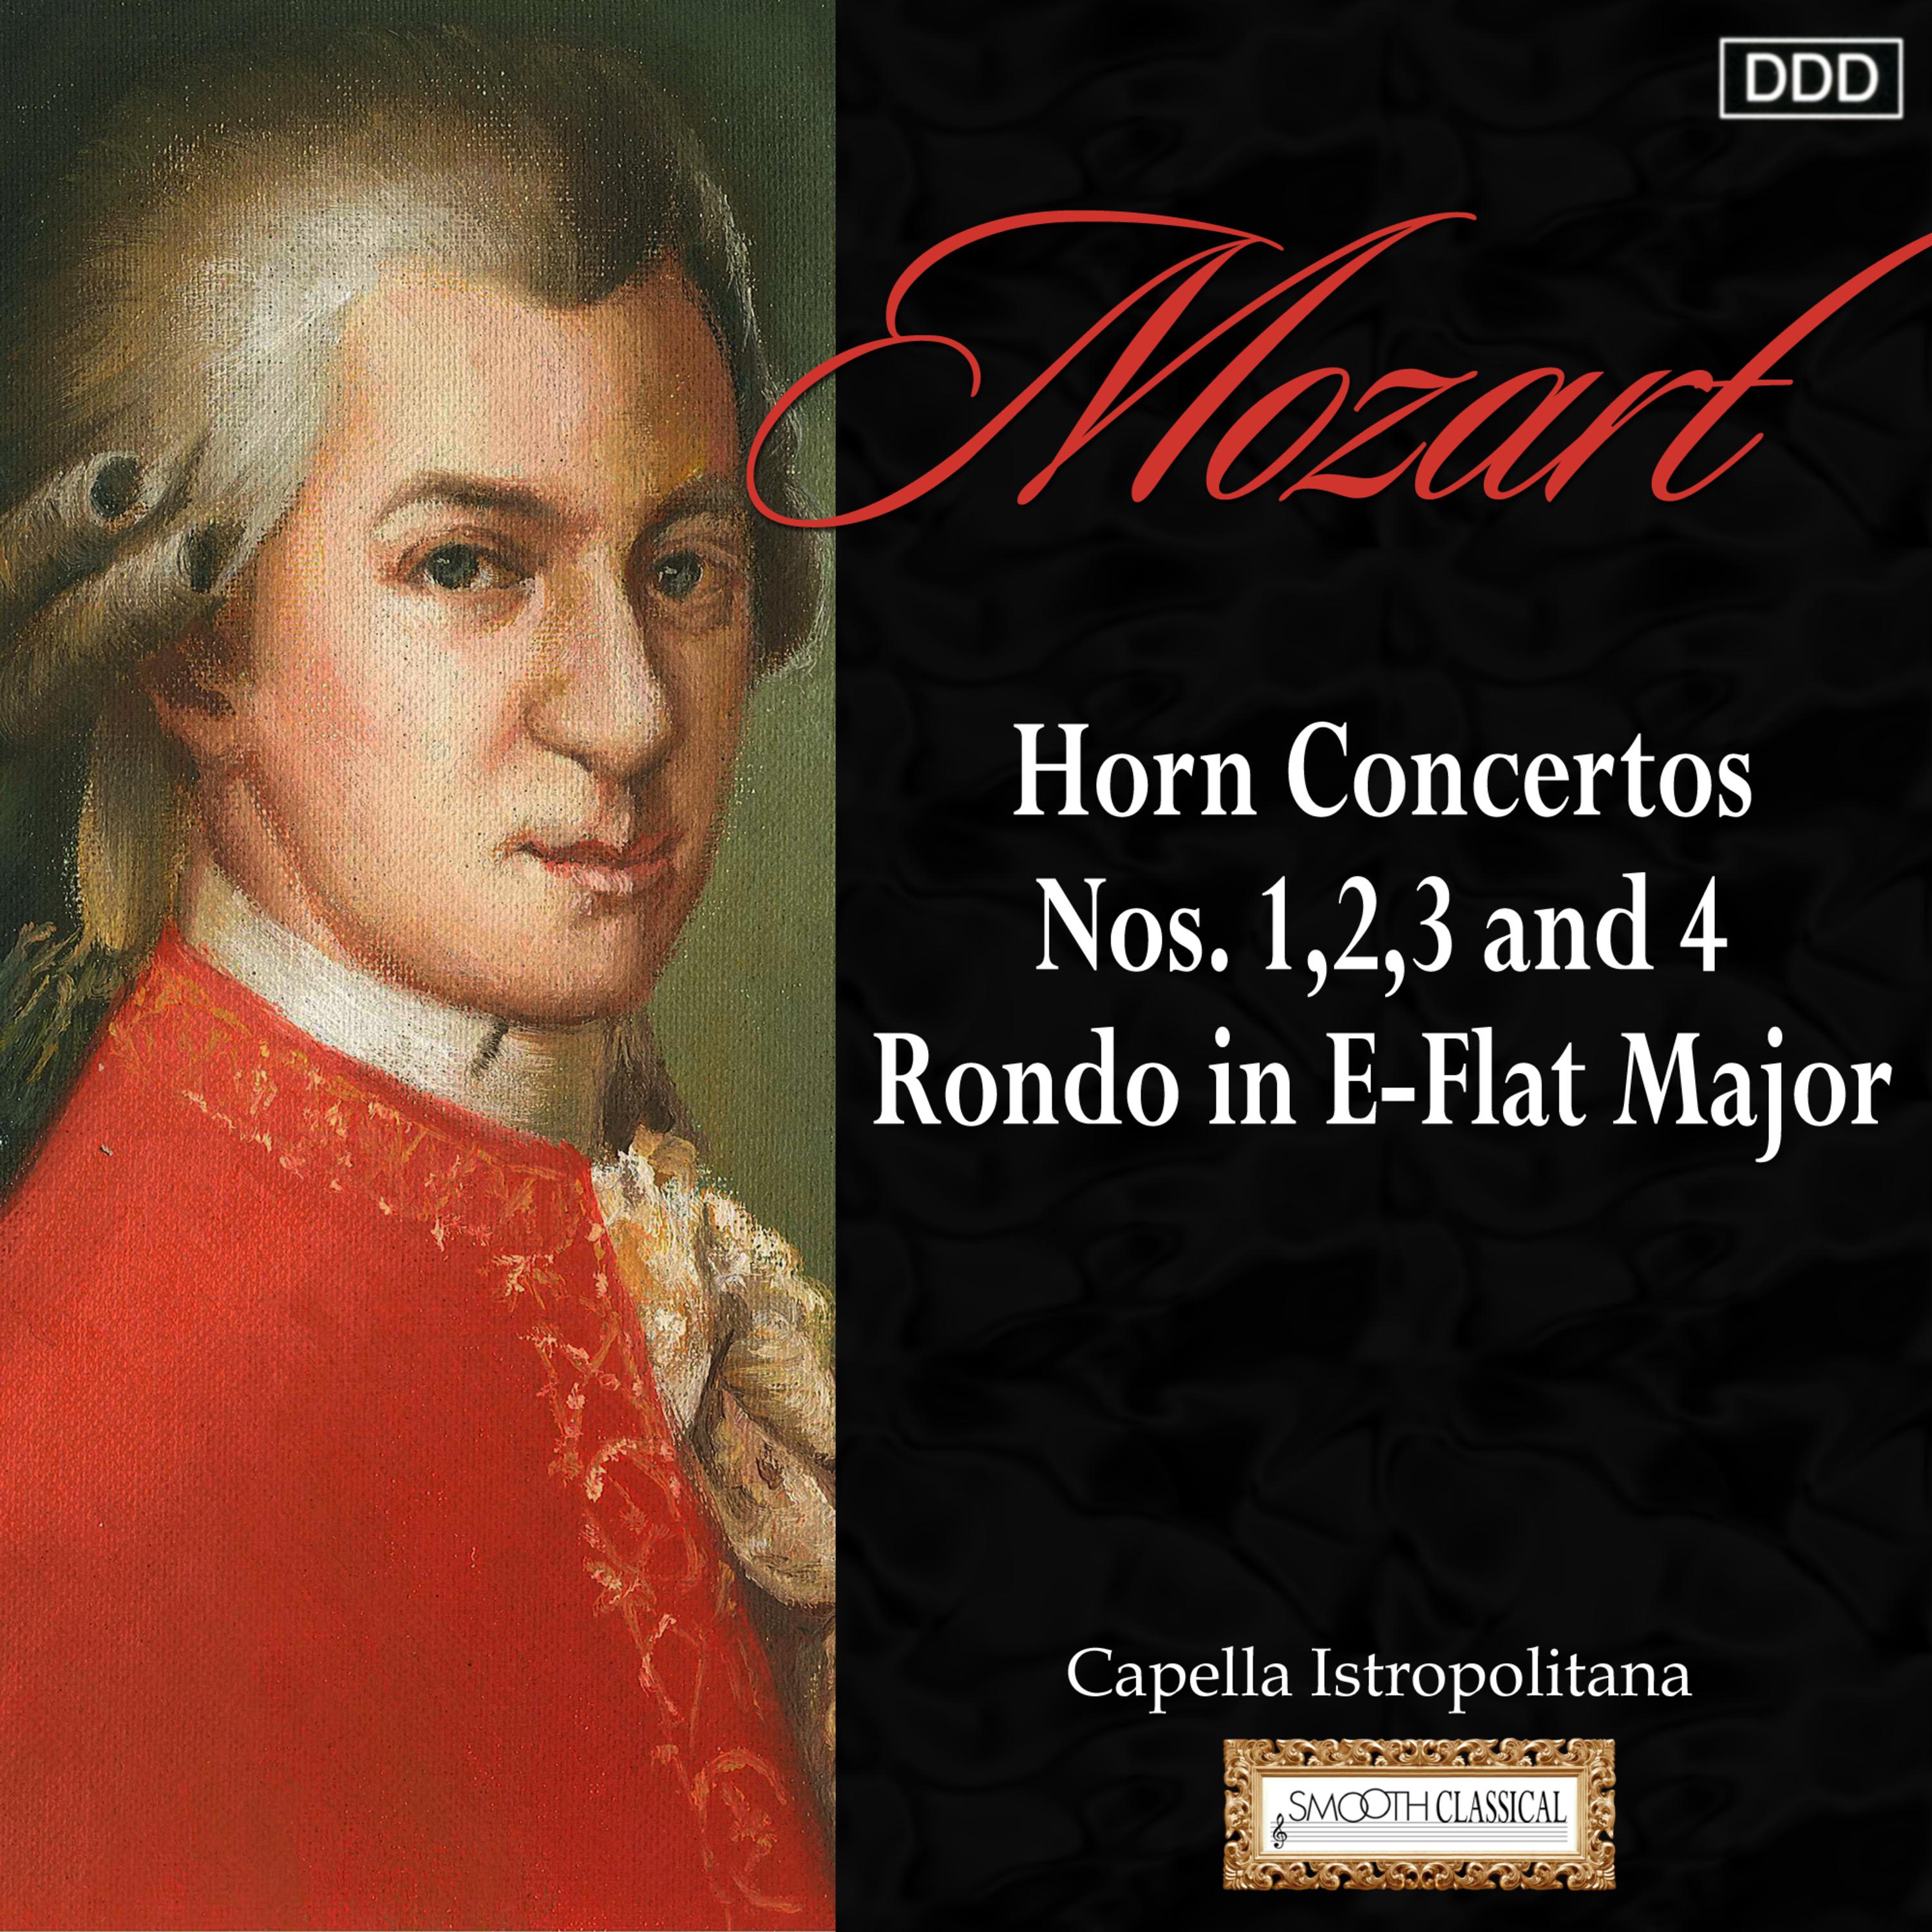 Horn Concerto No. 4 in E-Flat Major, K. 495: I. Allegro maestoso